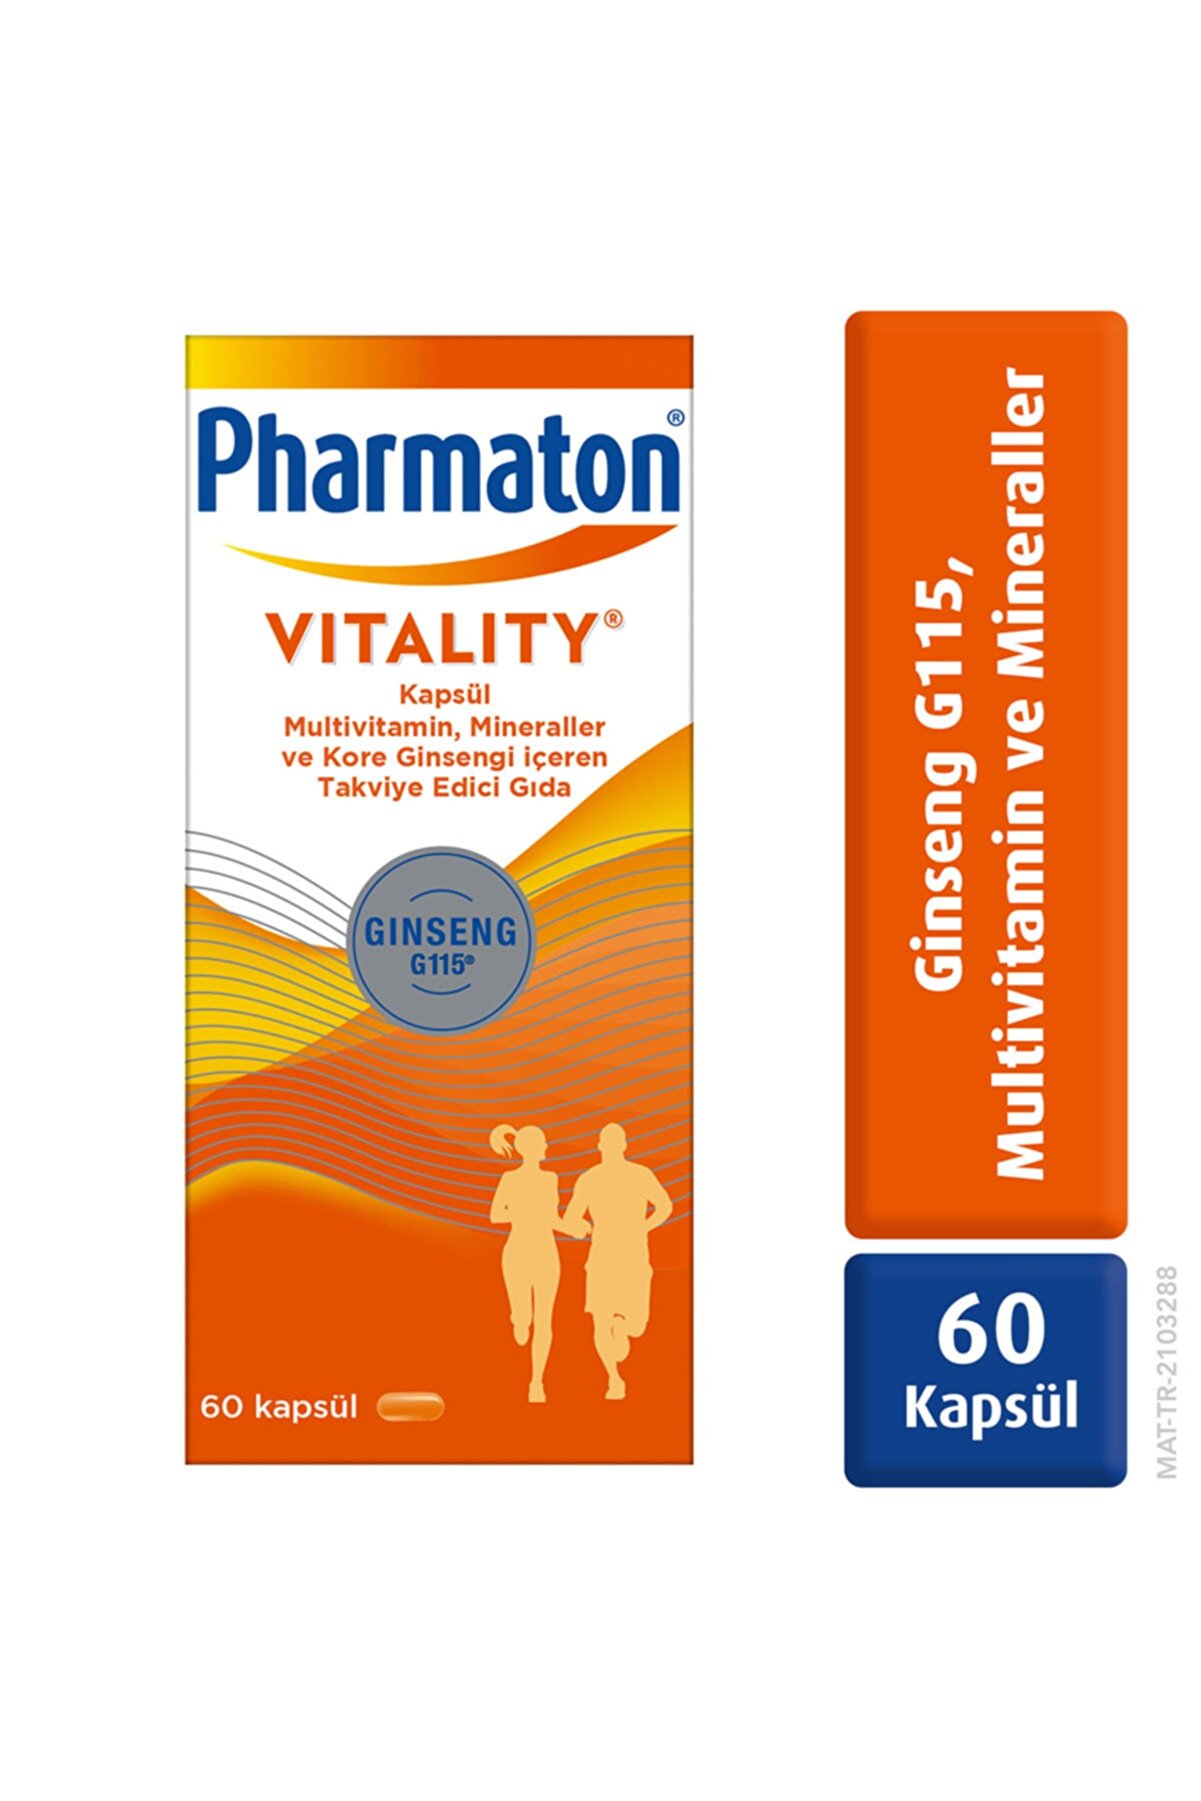 Pharmaton Vitality 60 Kapsül - Ginseng G115, Multivitamin ve Mineraller